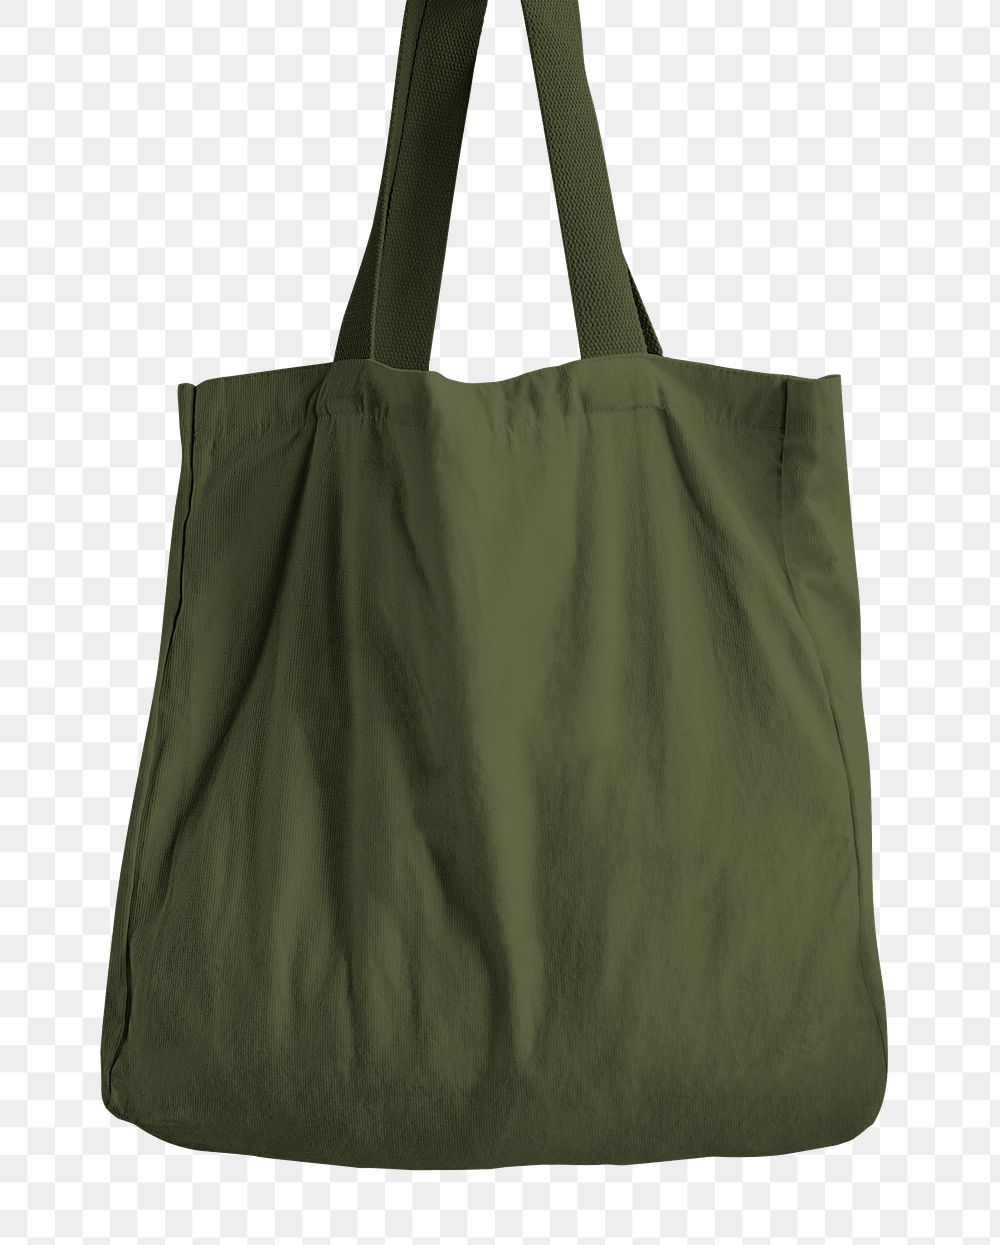 Tote bag png mockup in green on transparent background